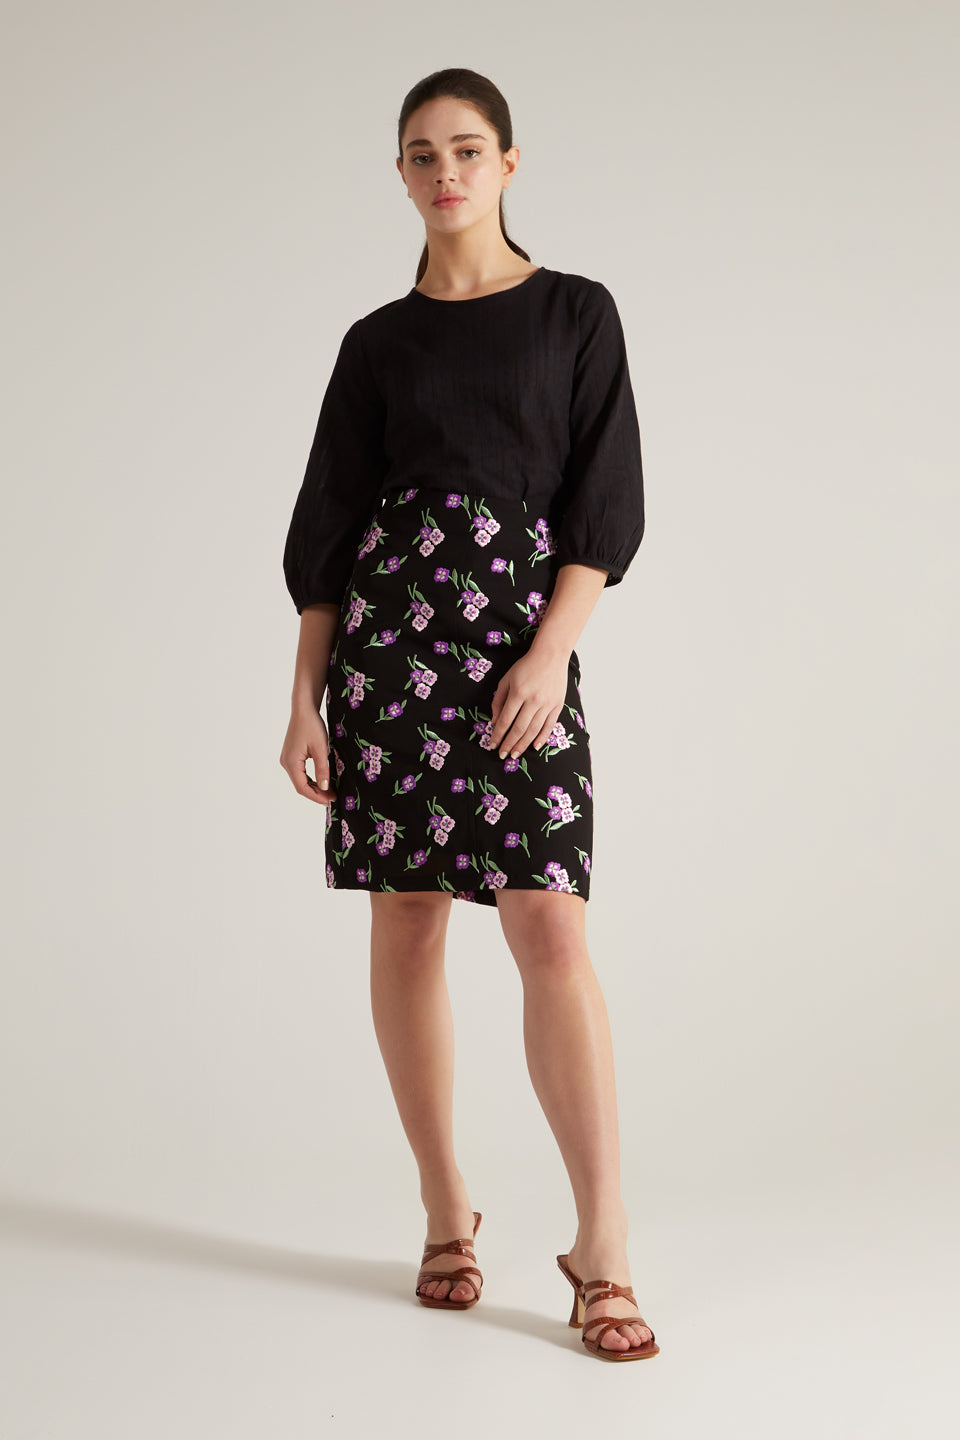 Adele Skirt - Sizes 0 & 1